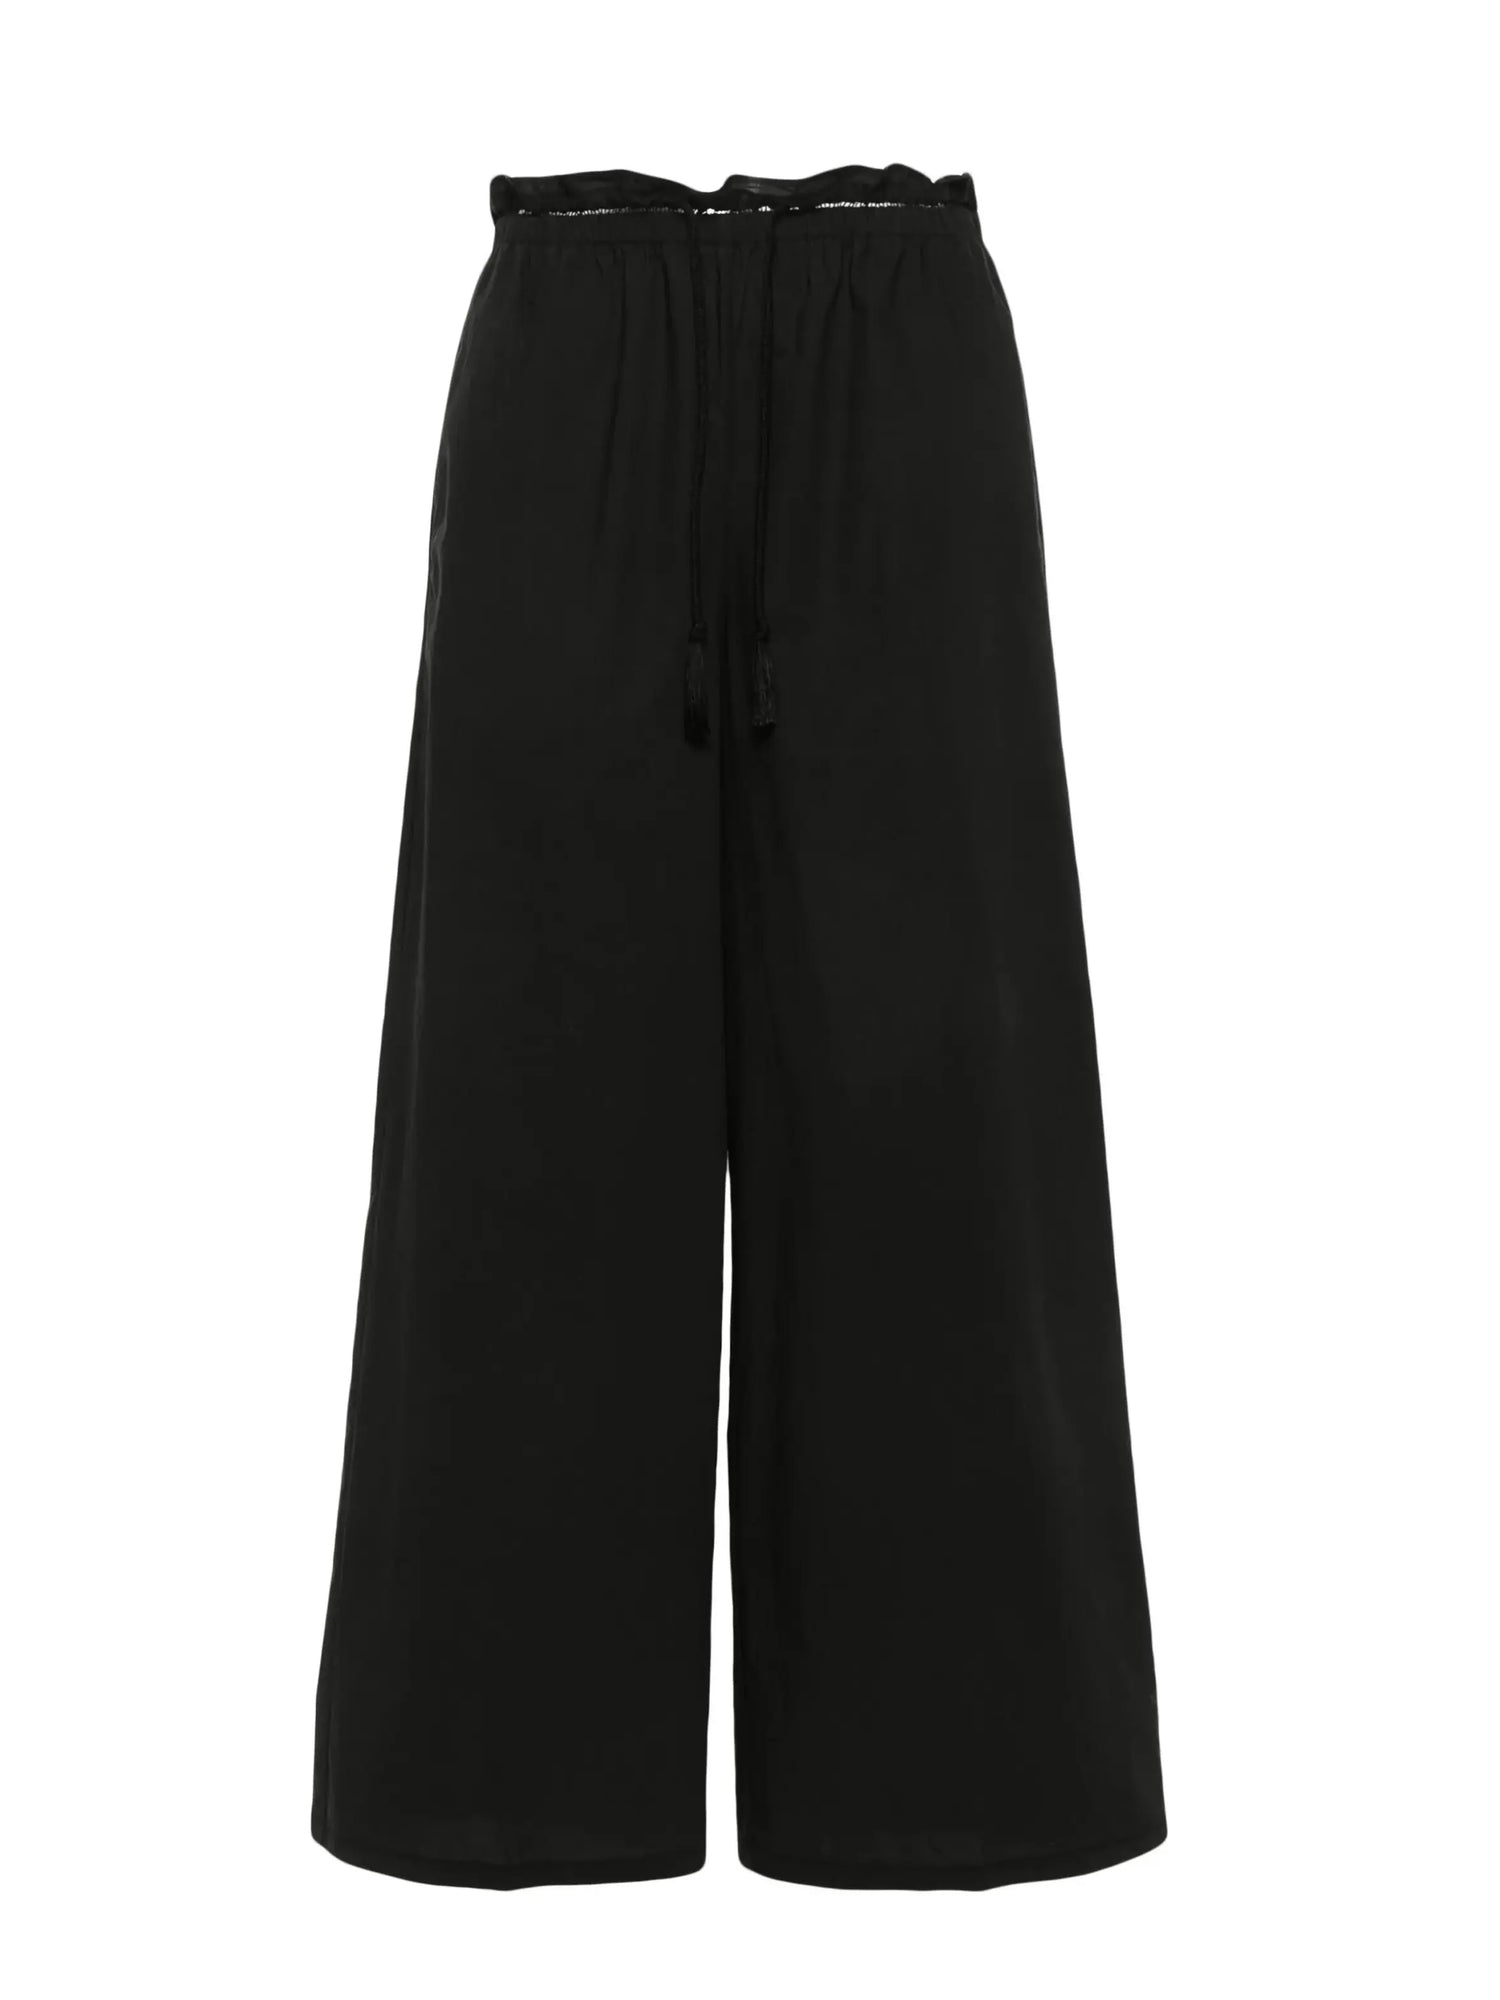 Cotton popline elasticated pants, black